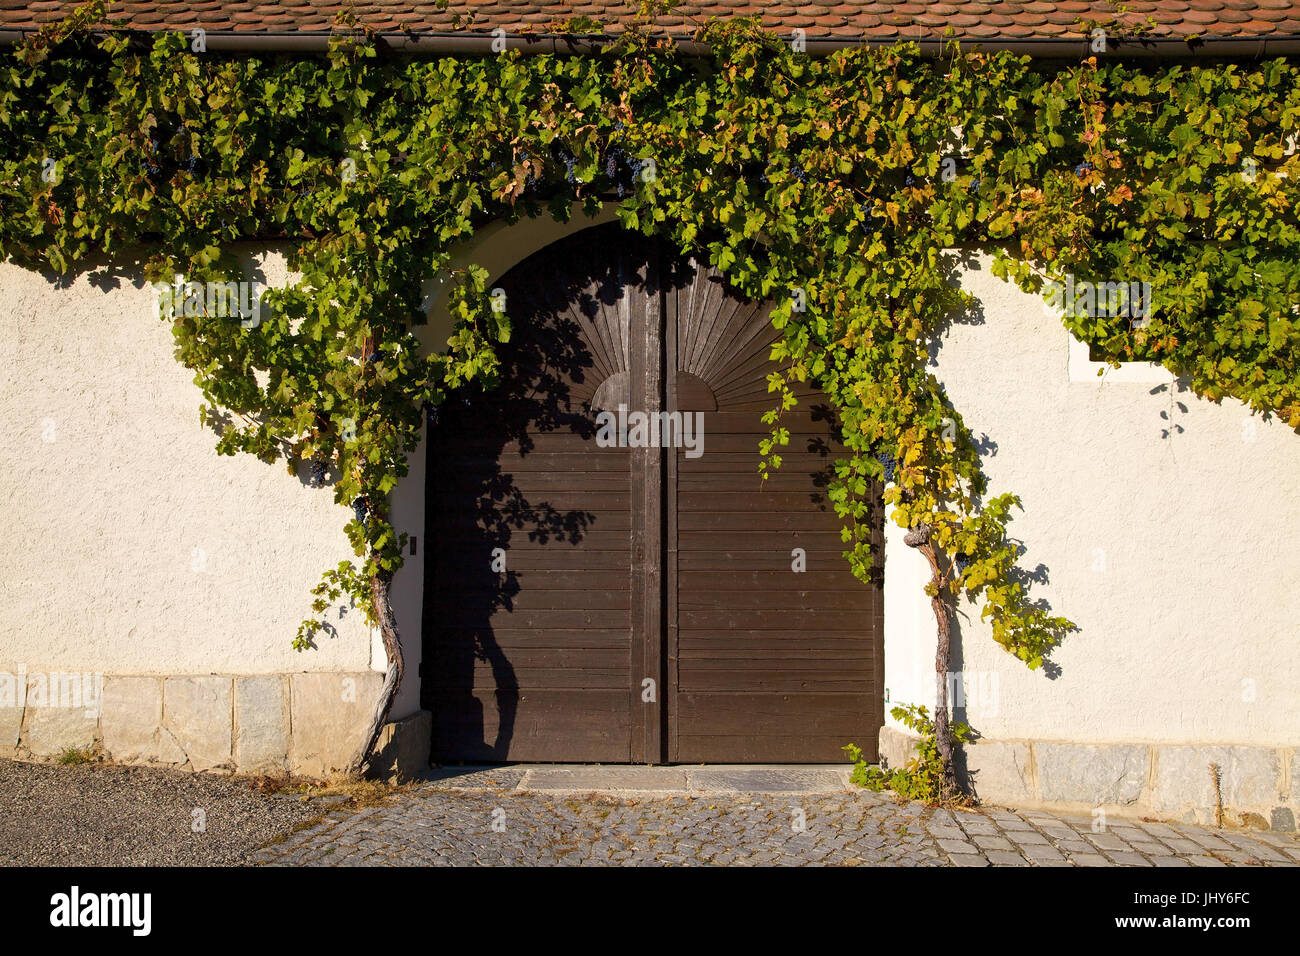 With wine umranktes court gate in spitz / the Danube, Austria, Lower Austria, Wachau - yard gate in spitz / the Danube, Austria, Lower Austria, Wachau Stock Photo